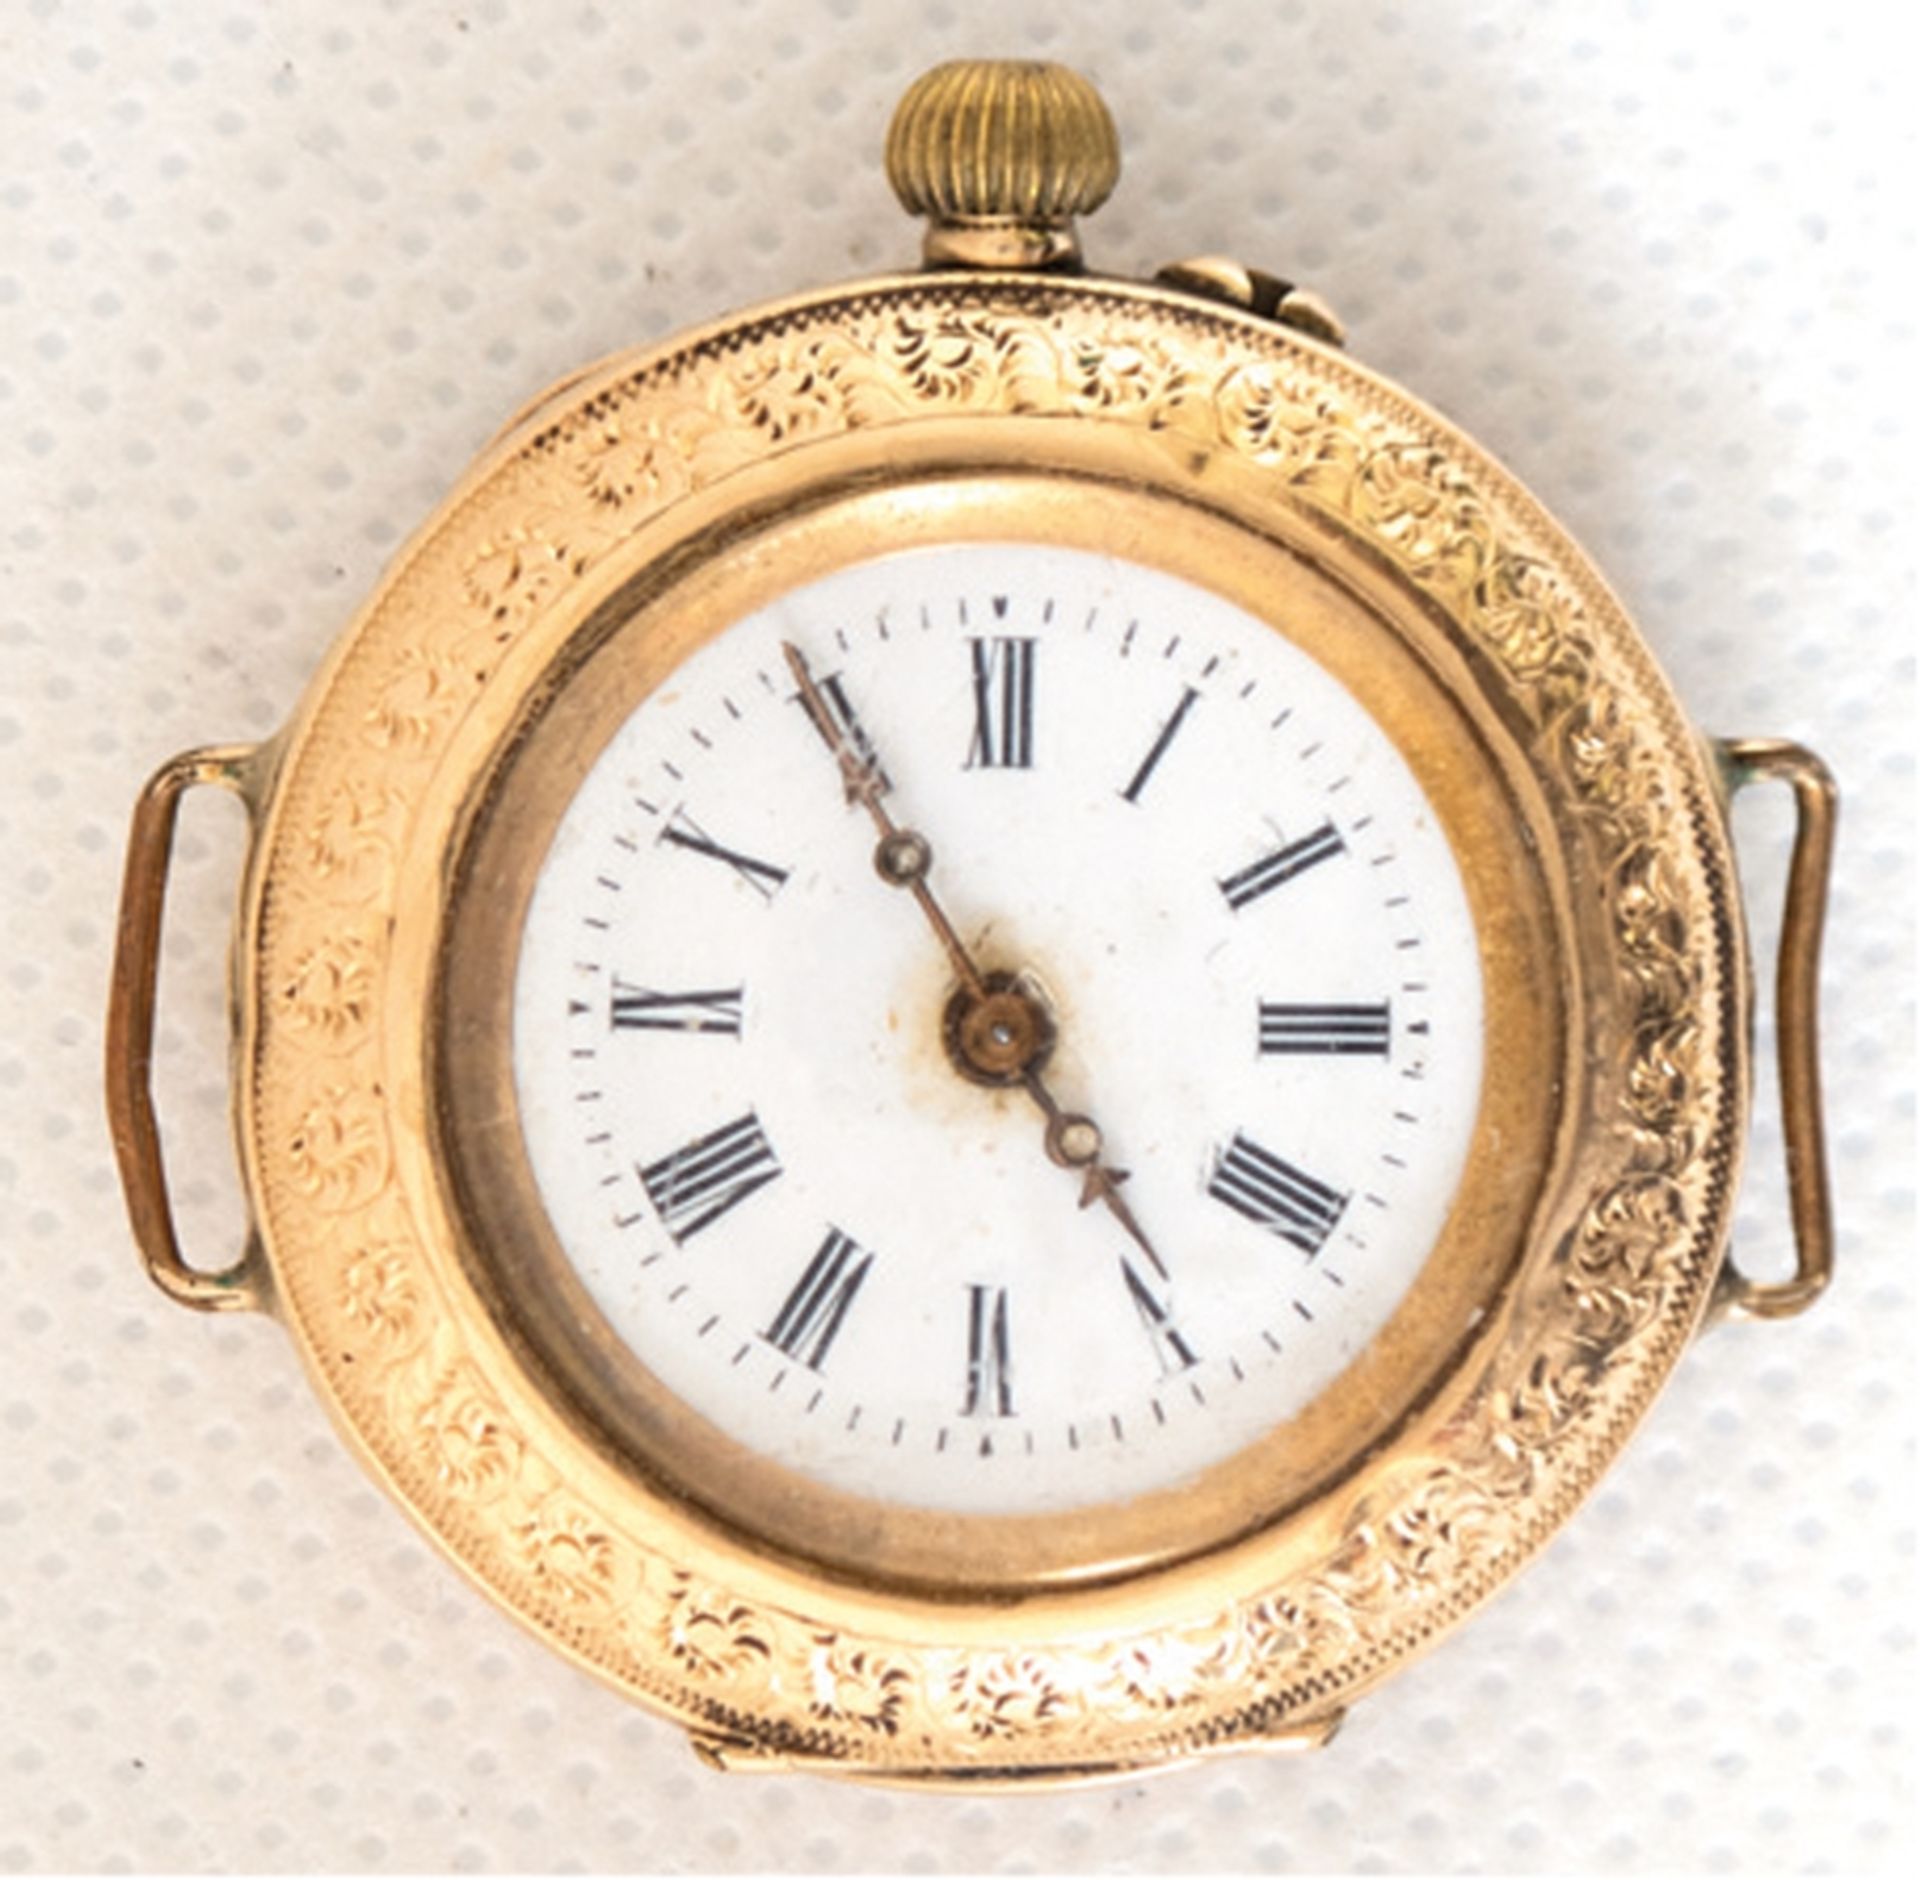 Damen-Armbanduhr um ca. 1900, 585er GG, Gesamtgewicht ca. 23 g, funktionstüchtig, Durchmesser ca. 3